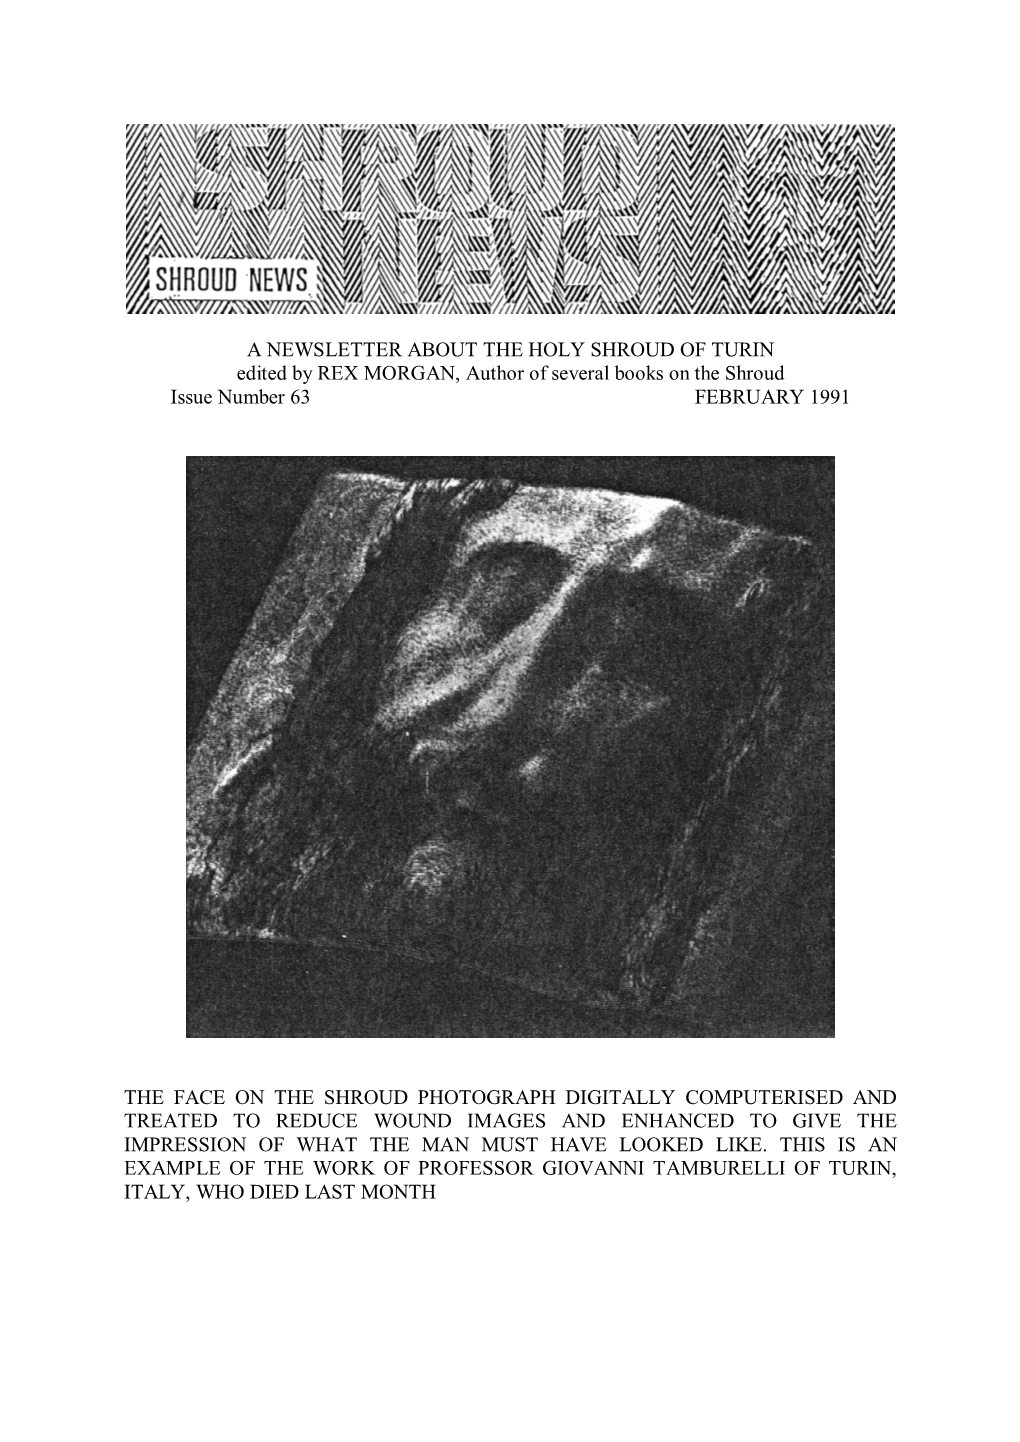 Shroud News Issue #63 February 1991